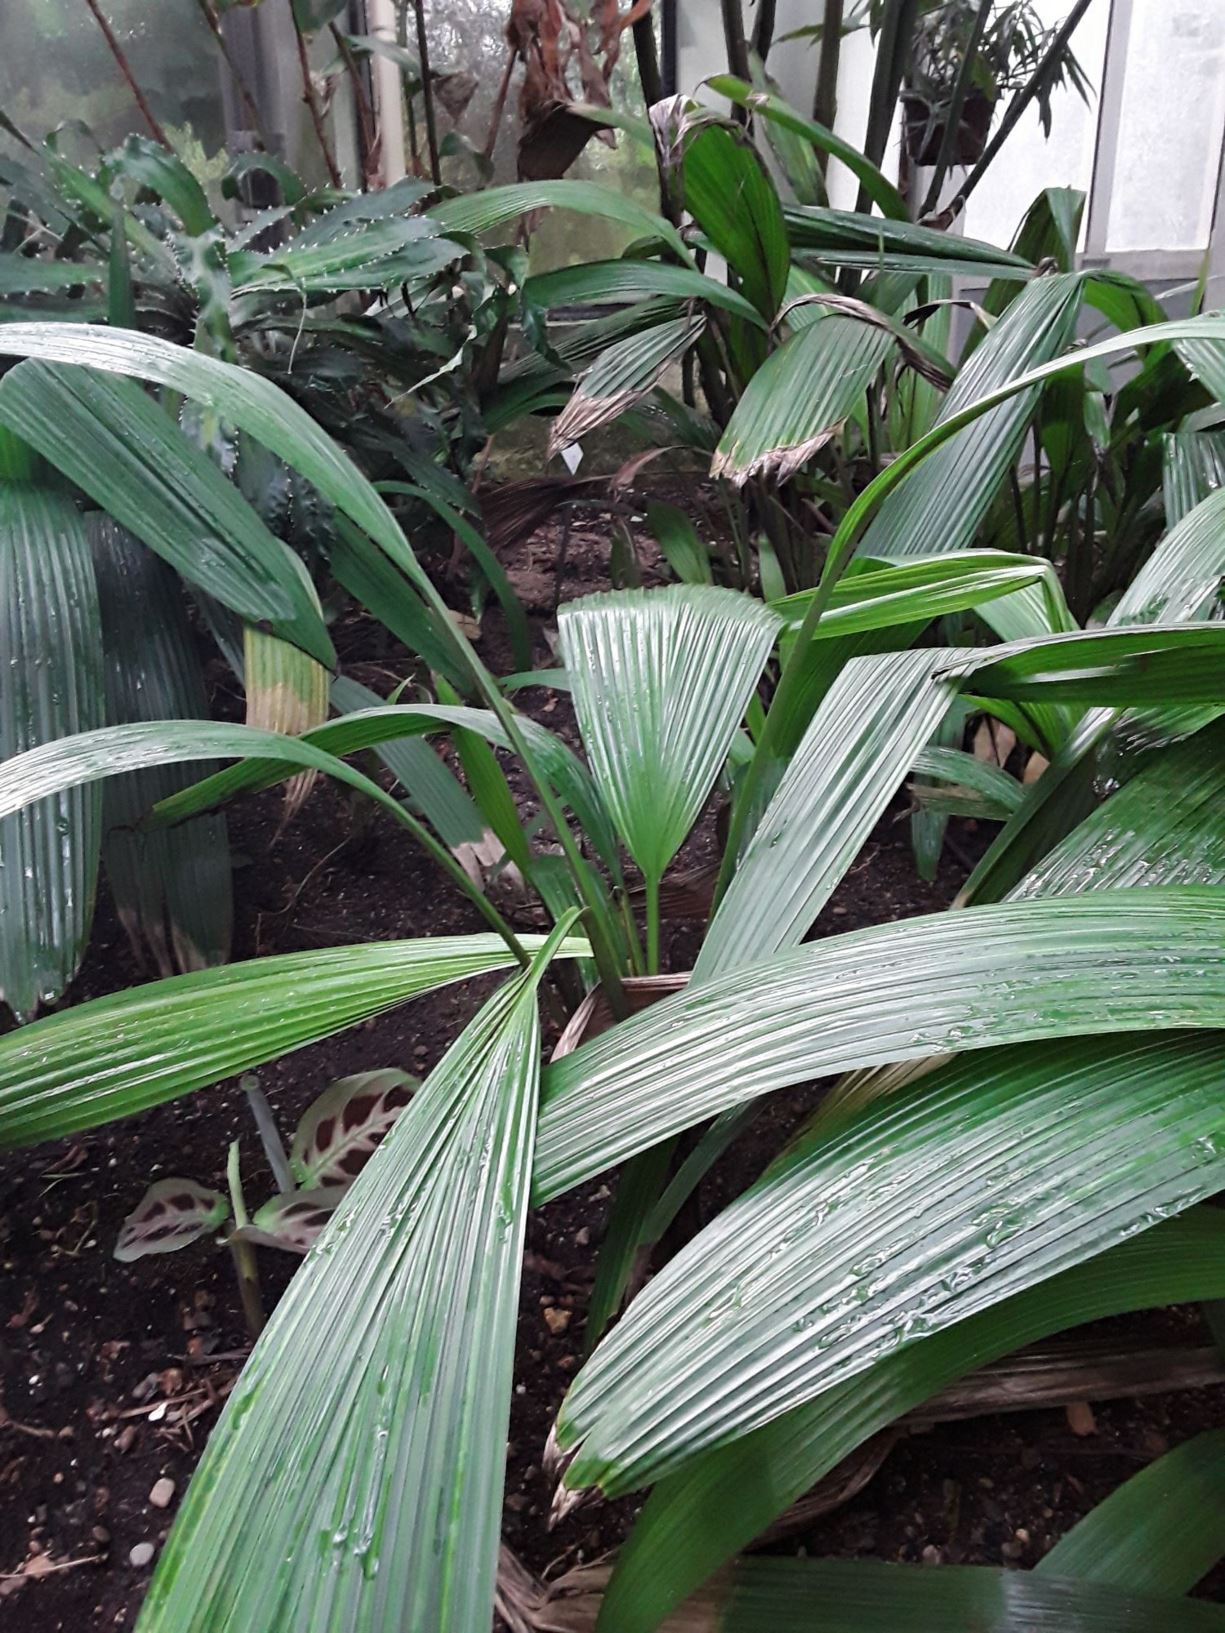 Curculigo capitulata - Rüssellilie, Palm grass, Weevil Lily